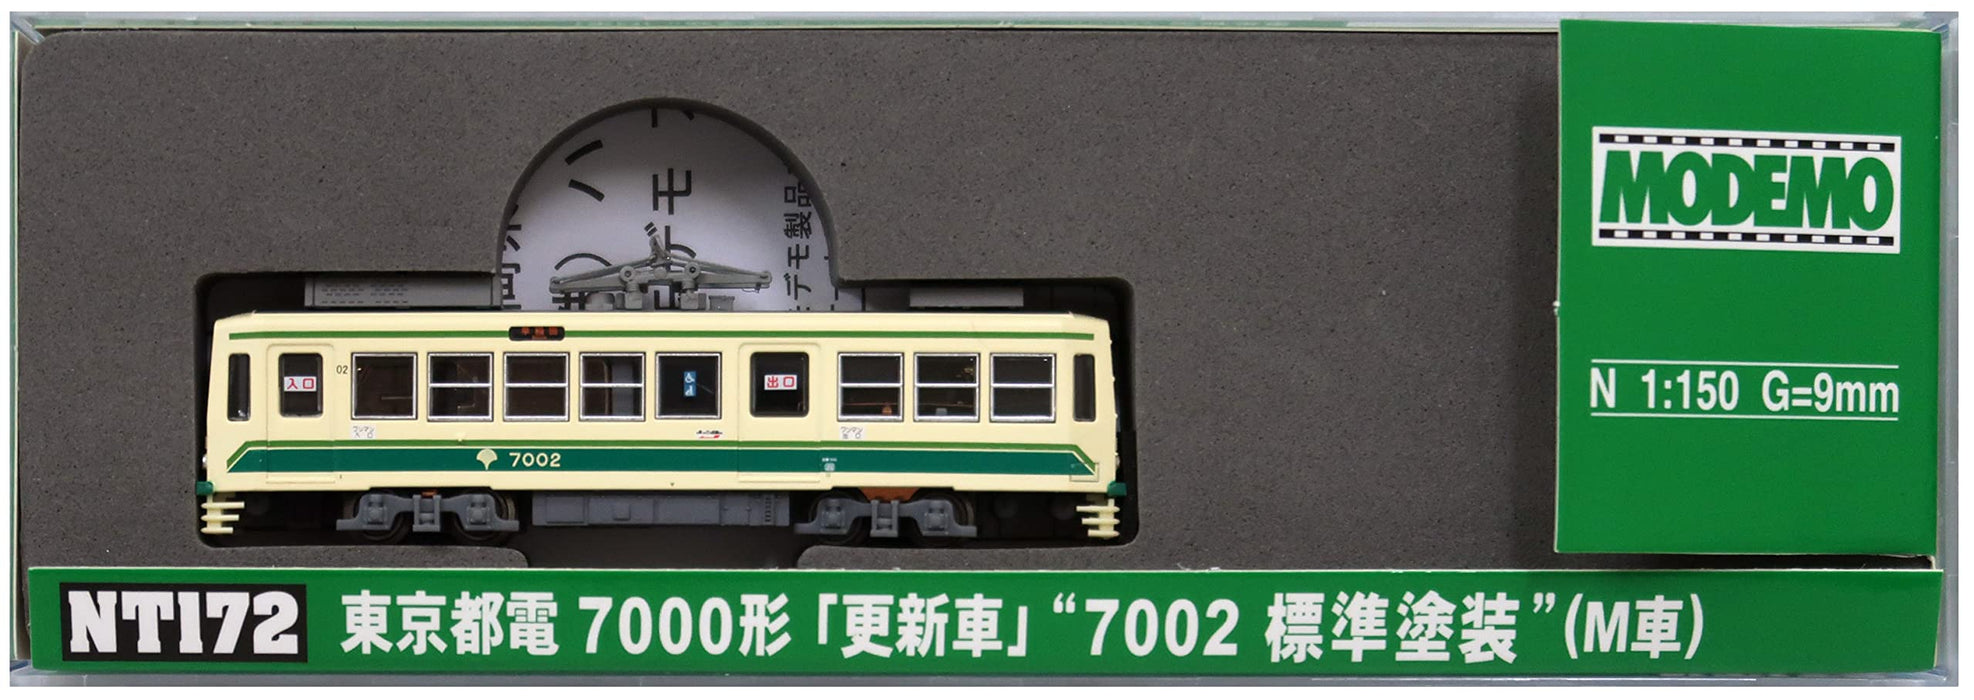 MODEMO Nt172 Tokyo Metropolitan Tramway Type 7000 Mise à jour '7002 Standard Painting' N Scale